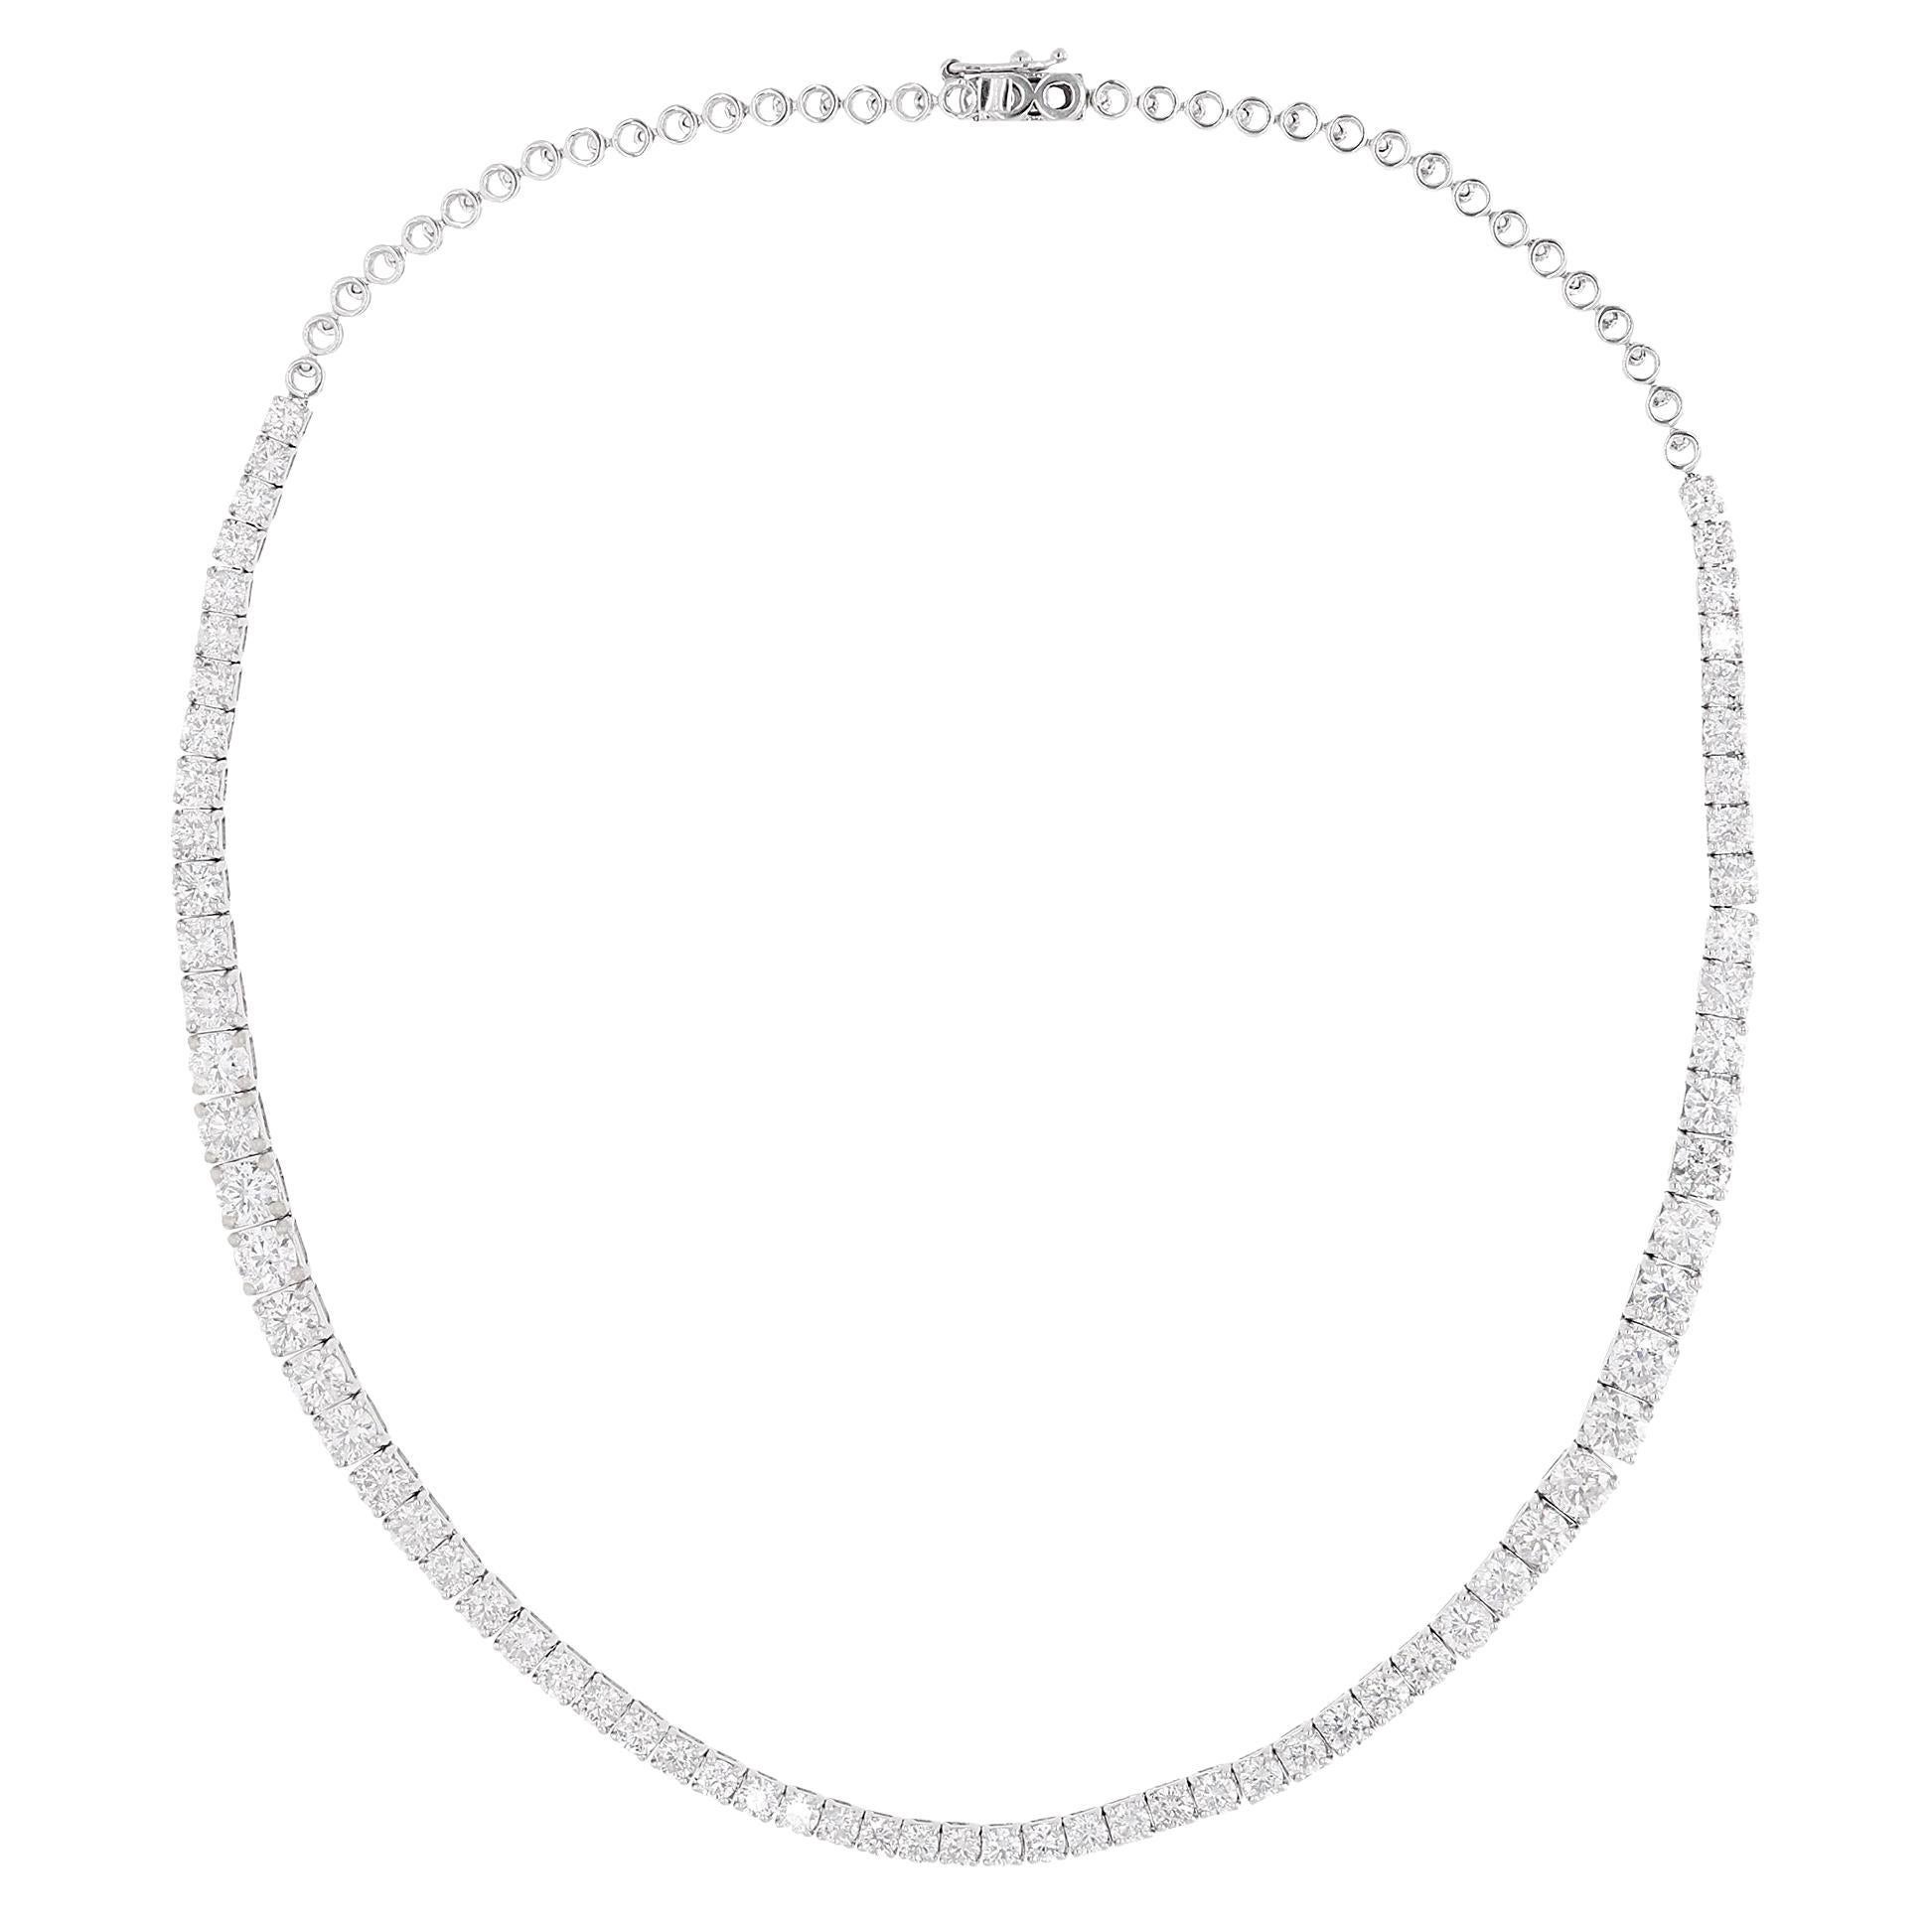 15.6 Carat SI Clarity HI Color Round Diamond Choker Necklace 14 Karat White Gold